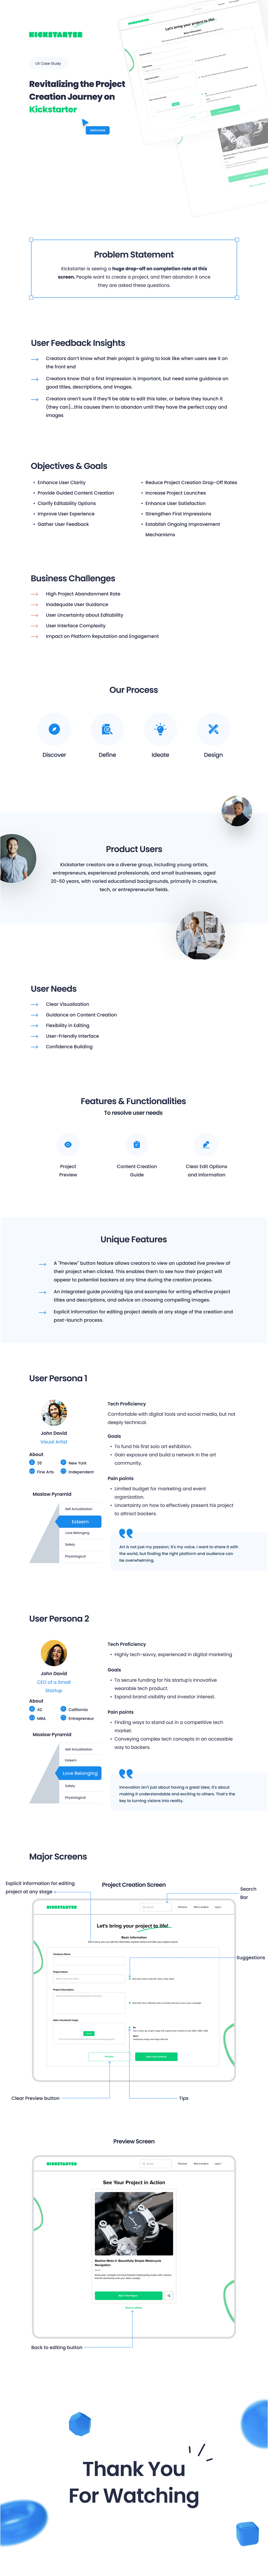 user experience User Experience Design ux user interface user interface design Interaction design  UI/UX uxdesign Kickstarter crowdfunding